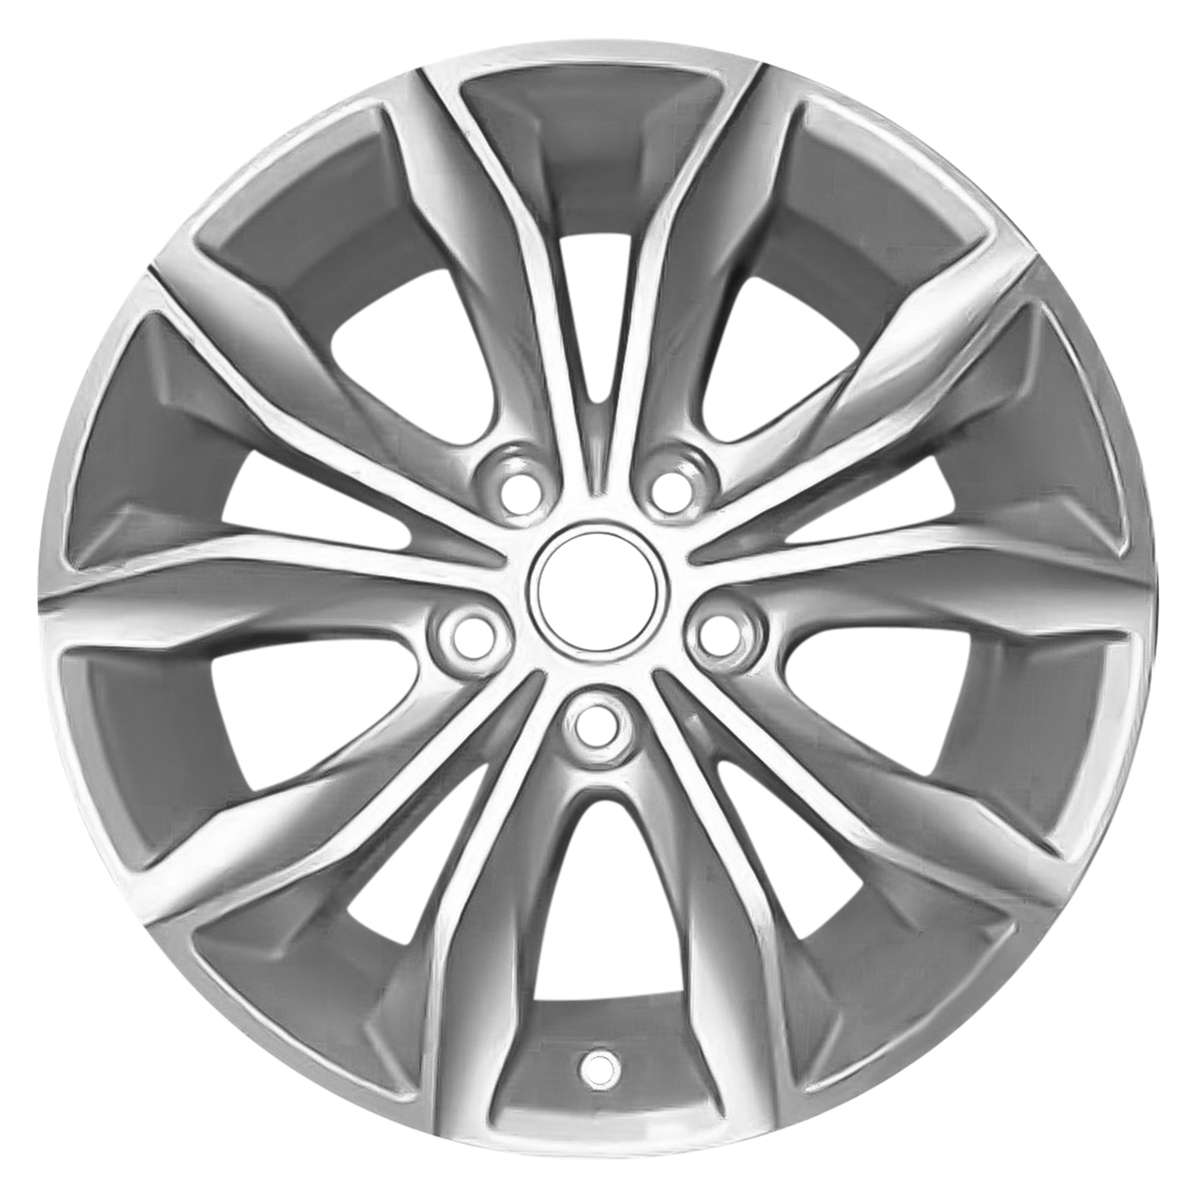 2020 Chevrolet Malibu New 17" Replacement Wheel Rim RW5894S